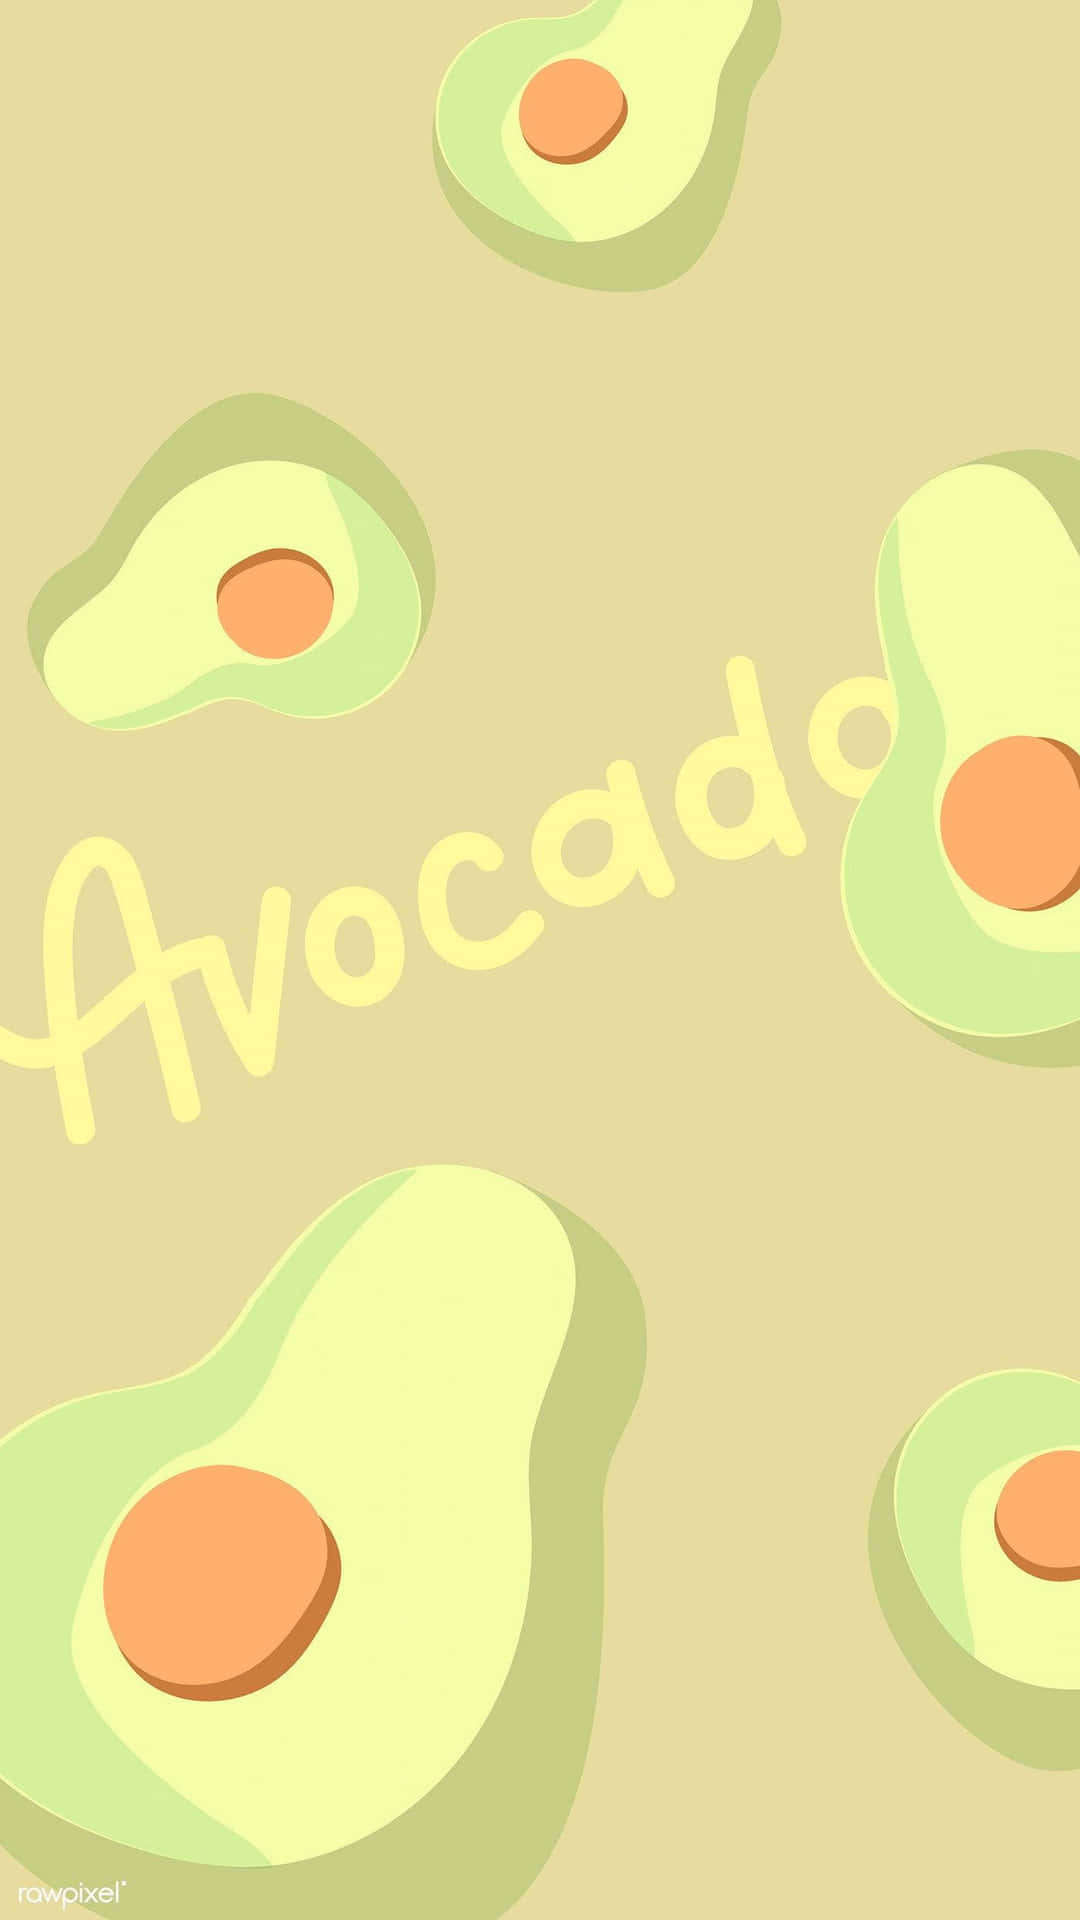 Avocados på en beig baggrund med ordet avocado skrevet i et pænt skrift Wallpaper